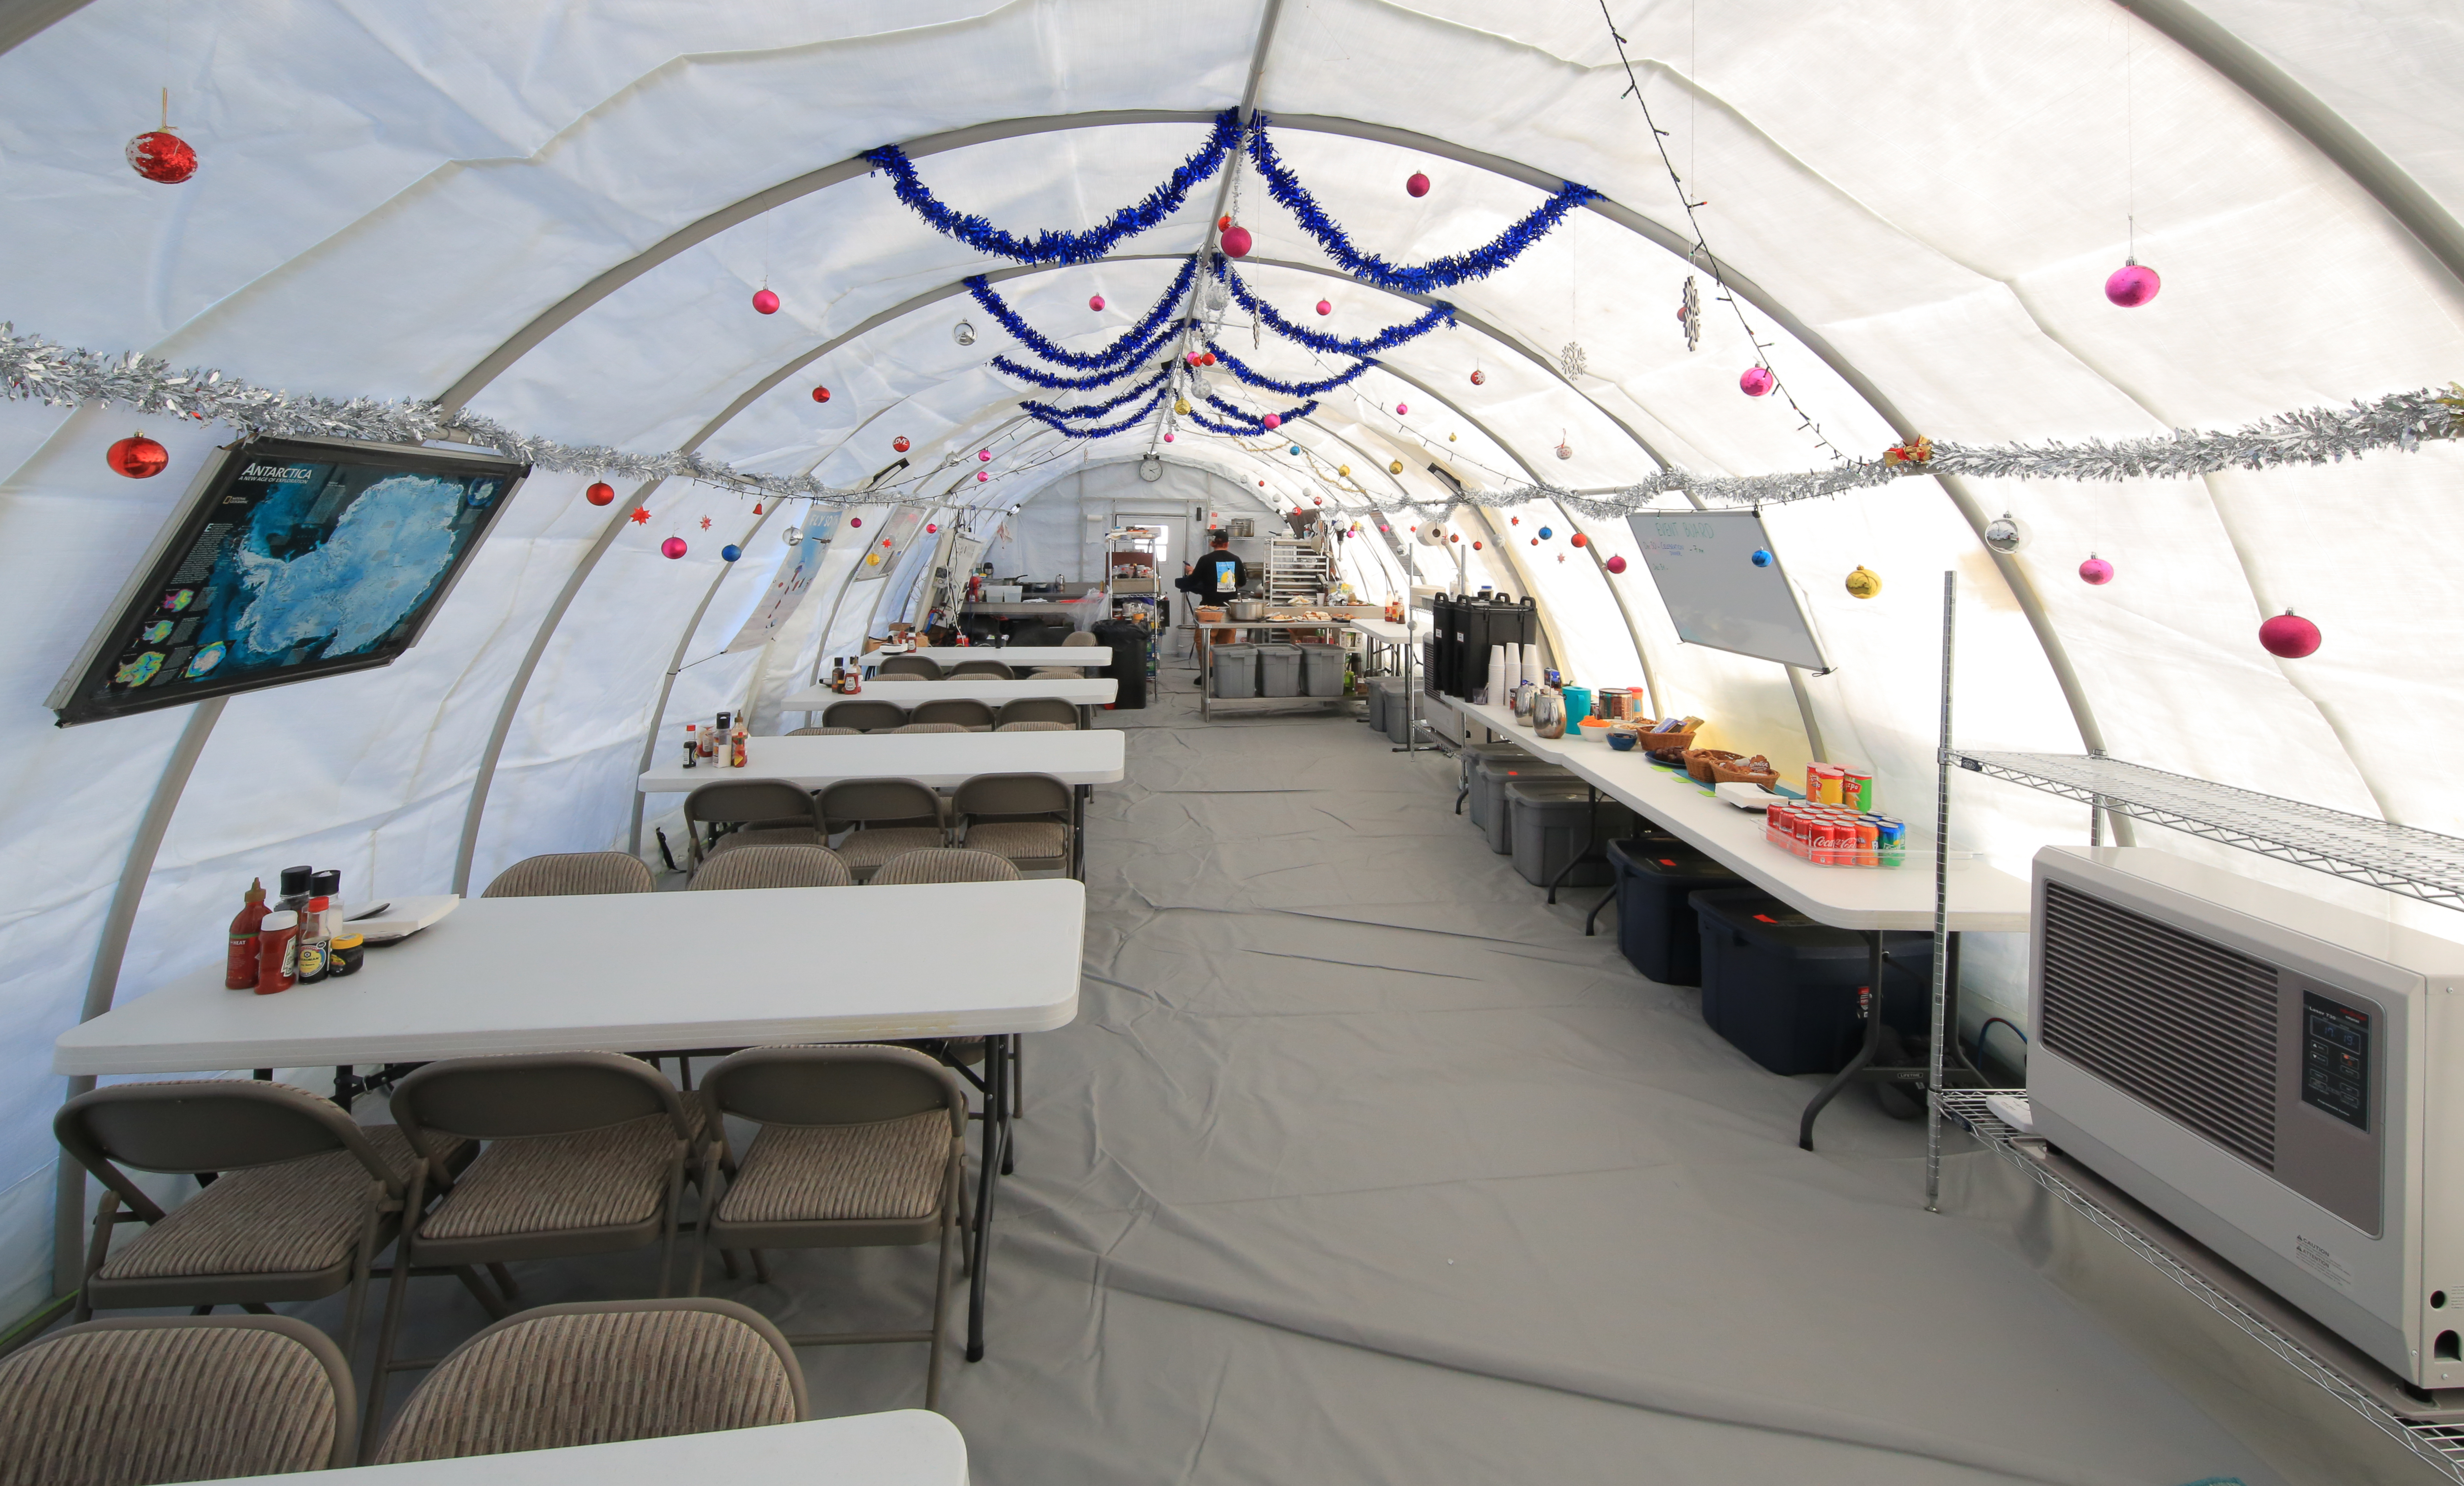 Dining tent interior